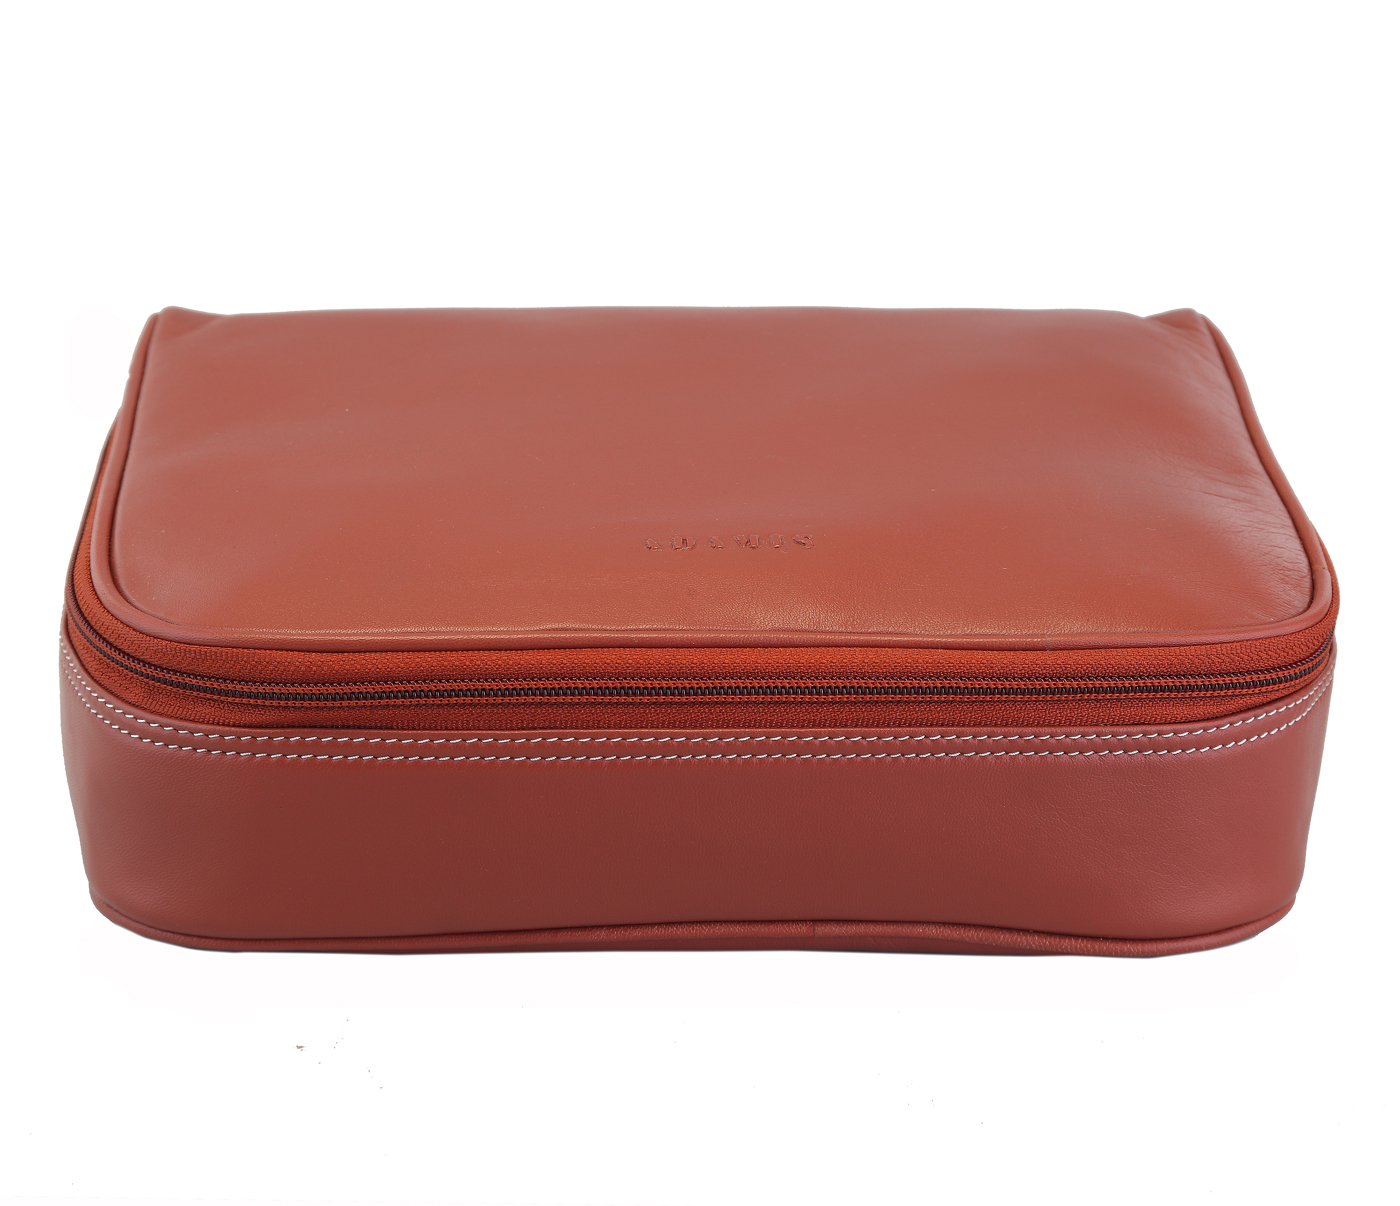  Leather Travel Essential(Tan)SC5